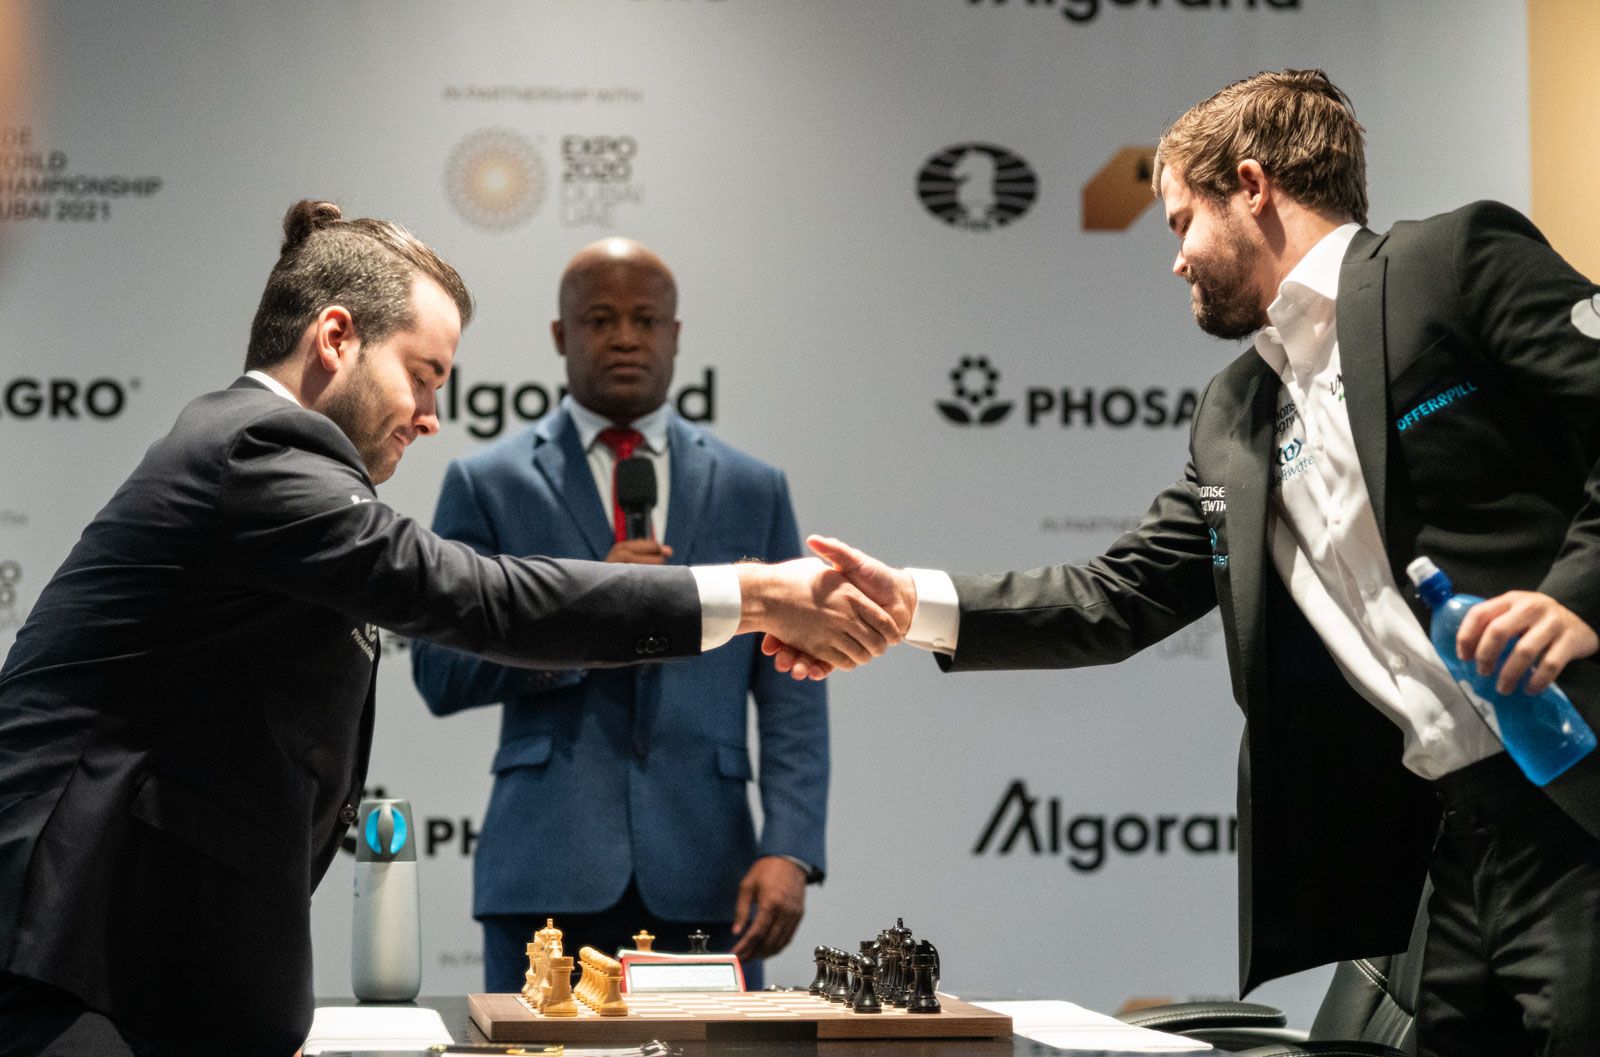 FIDE World Chess Championship 2021: Carlsen Defeats Nepomniachtchi 7.5-3.5  